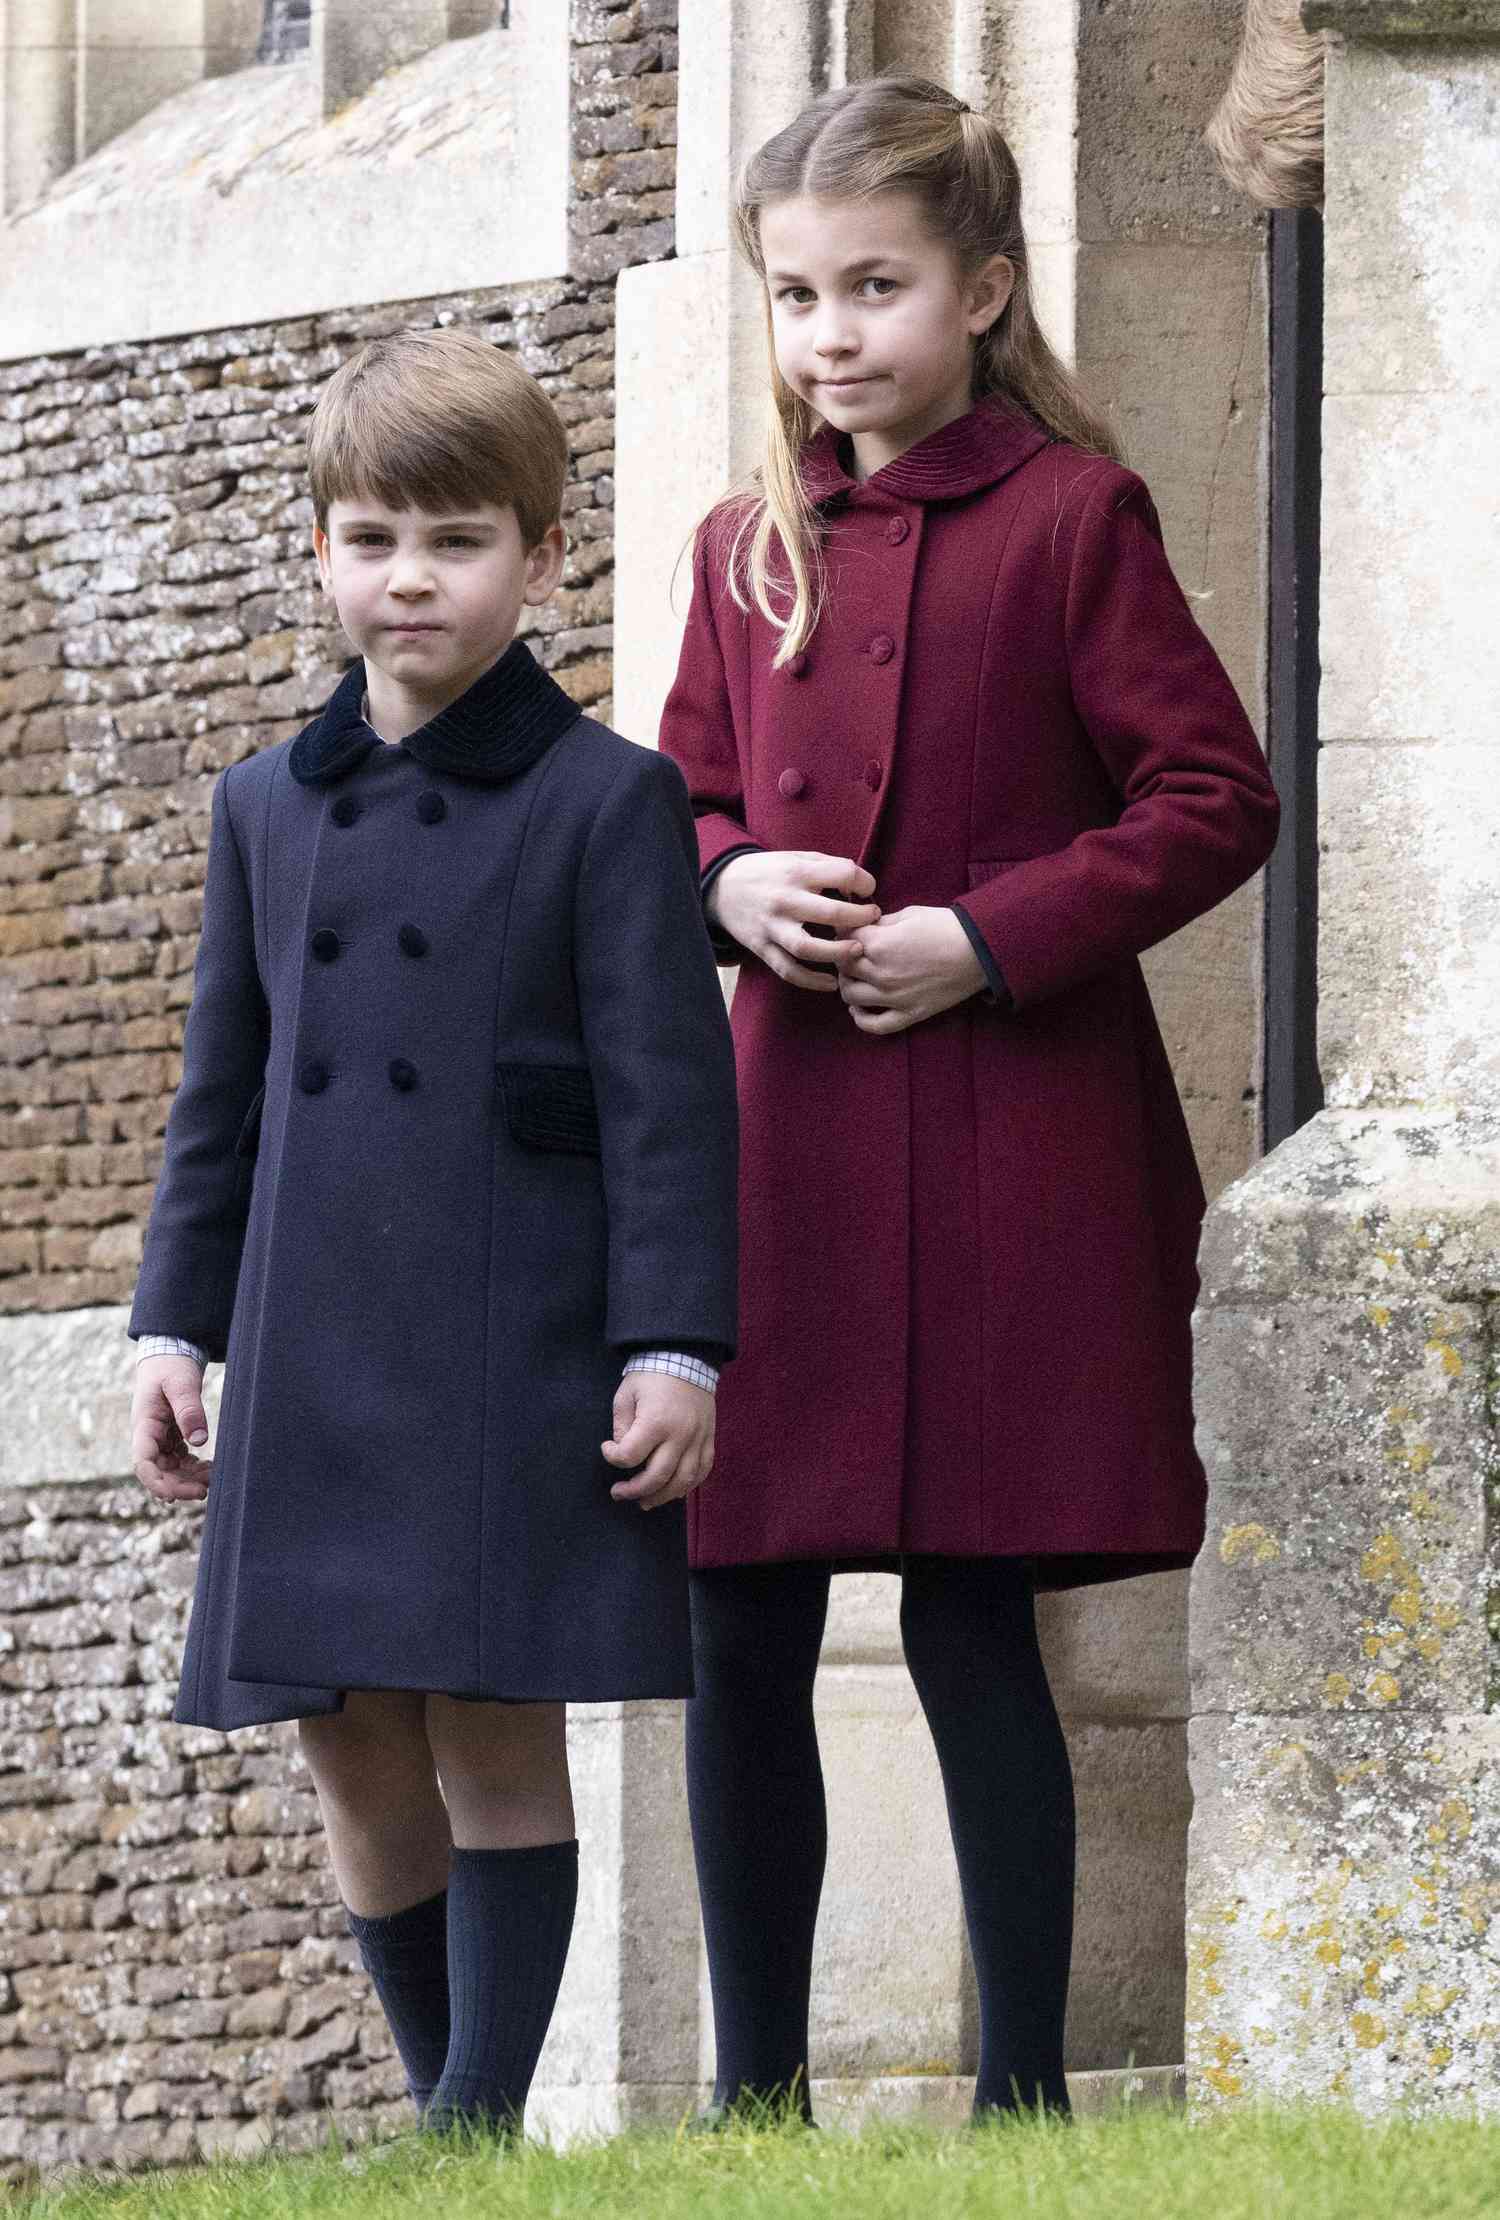 Prince Louis and Princess Charlotte standing